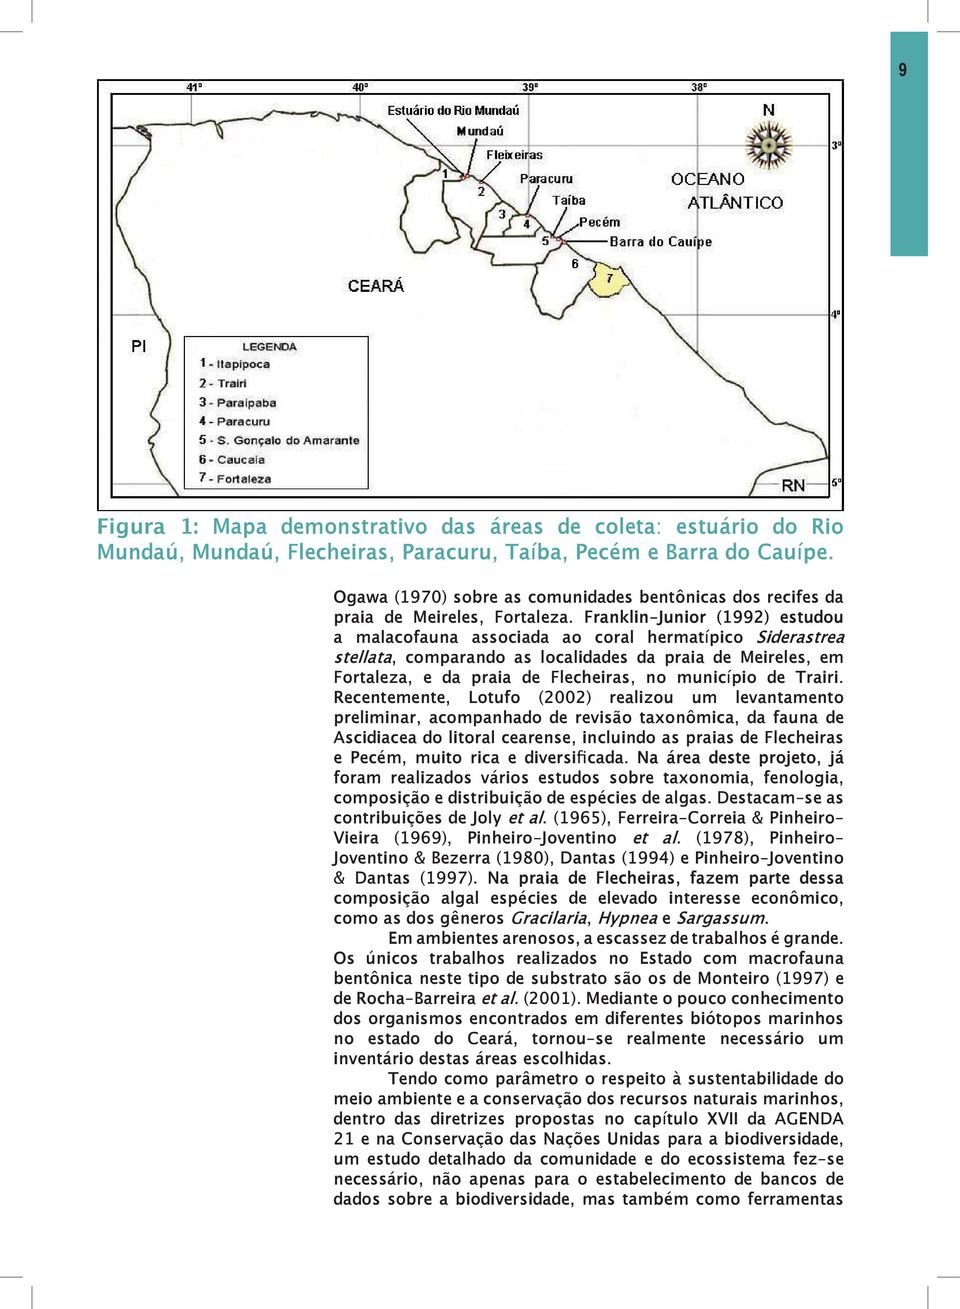 Franklin-Junior (1992) estudou a malacofauna associada ao coral hermatípico Siderastrea stellata, comparando as localidades da praia de Meireles, em Fortaleza, e da praia de Flecheiras, no município